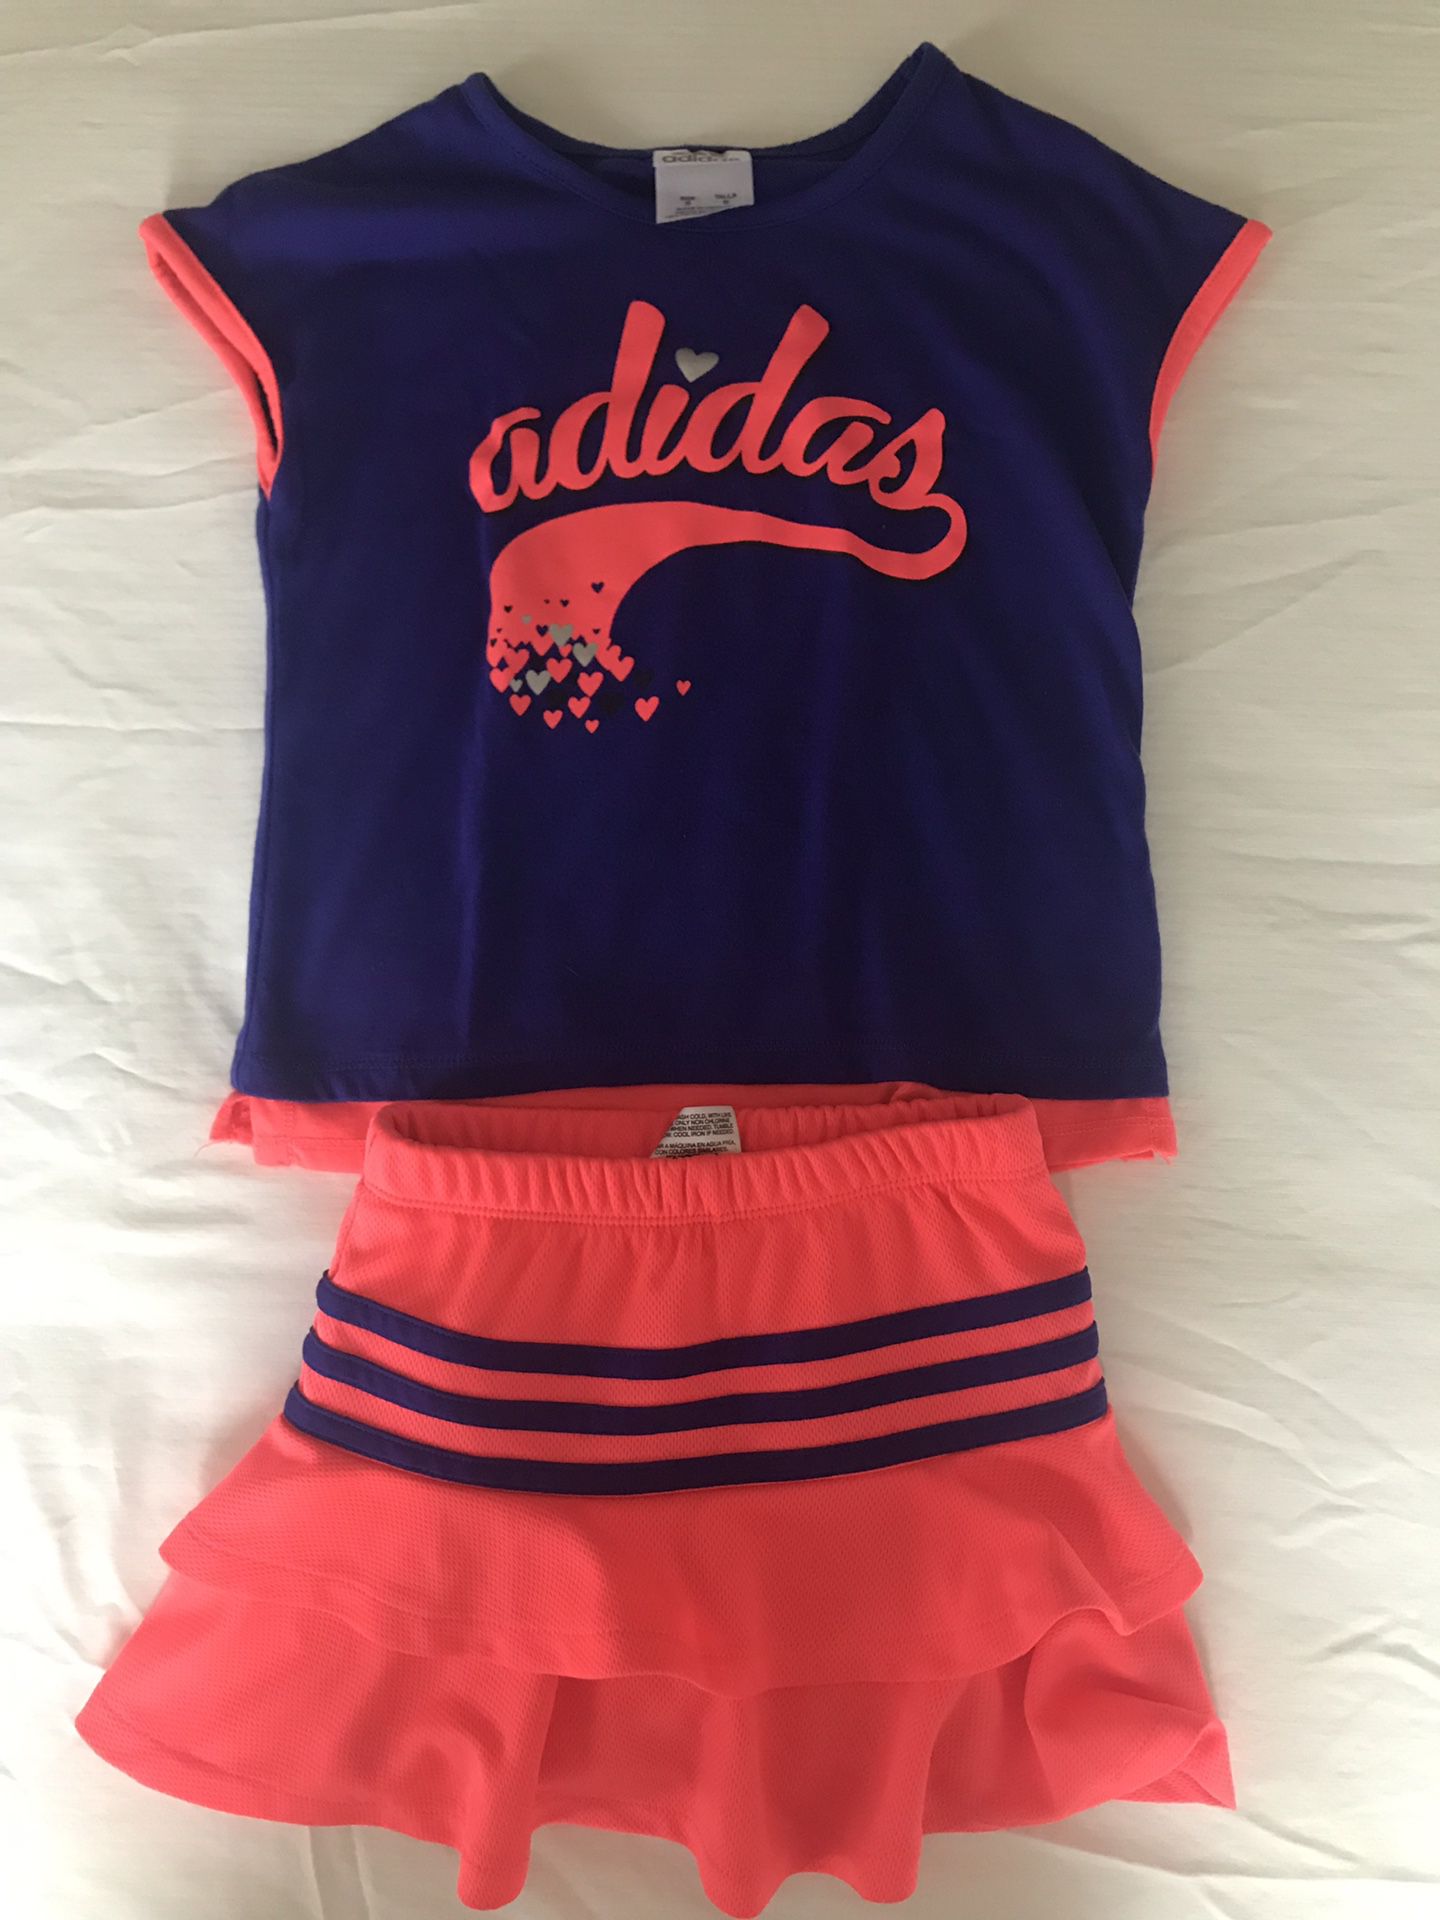 Adidas kid girl tennis skirt & Tee size 5